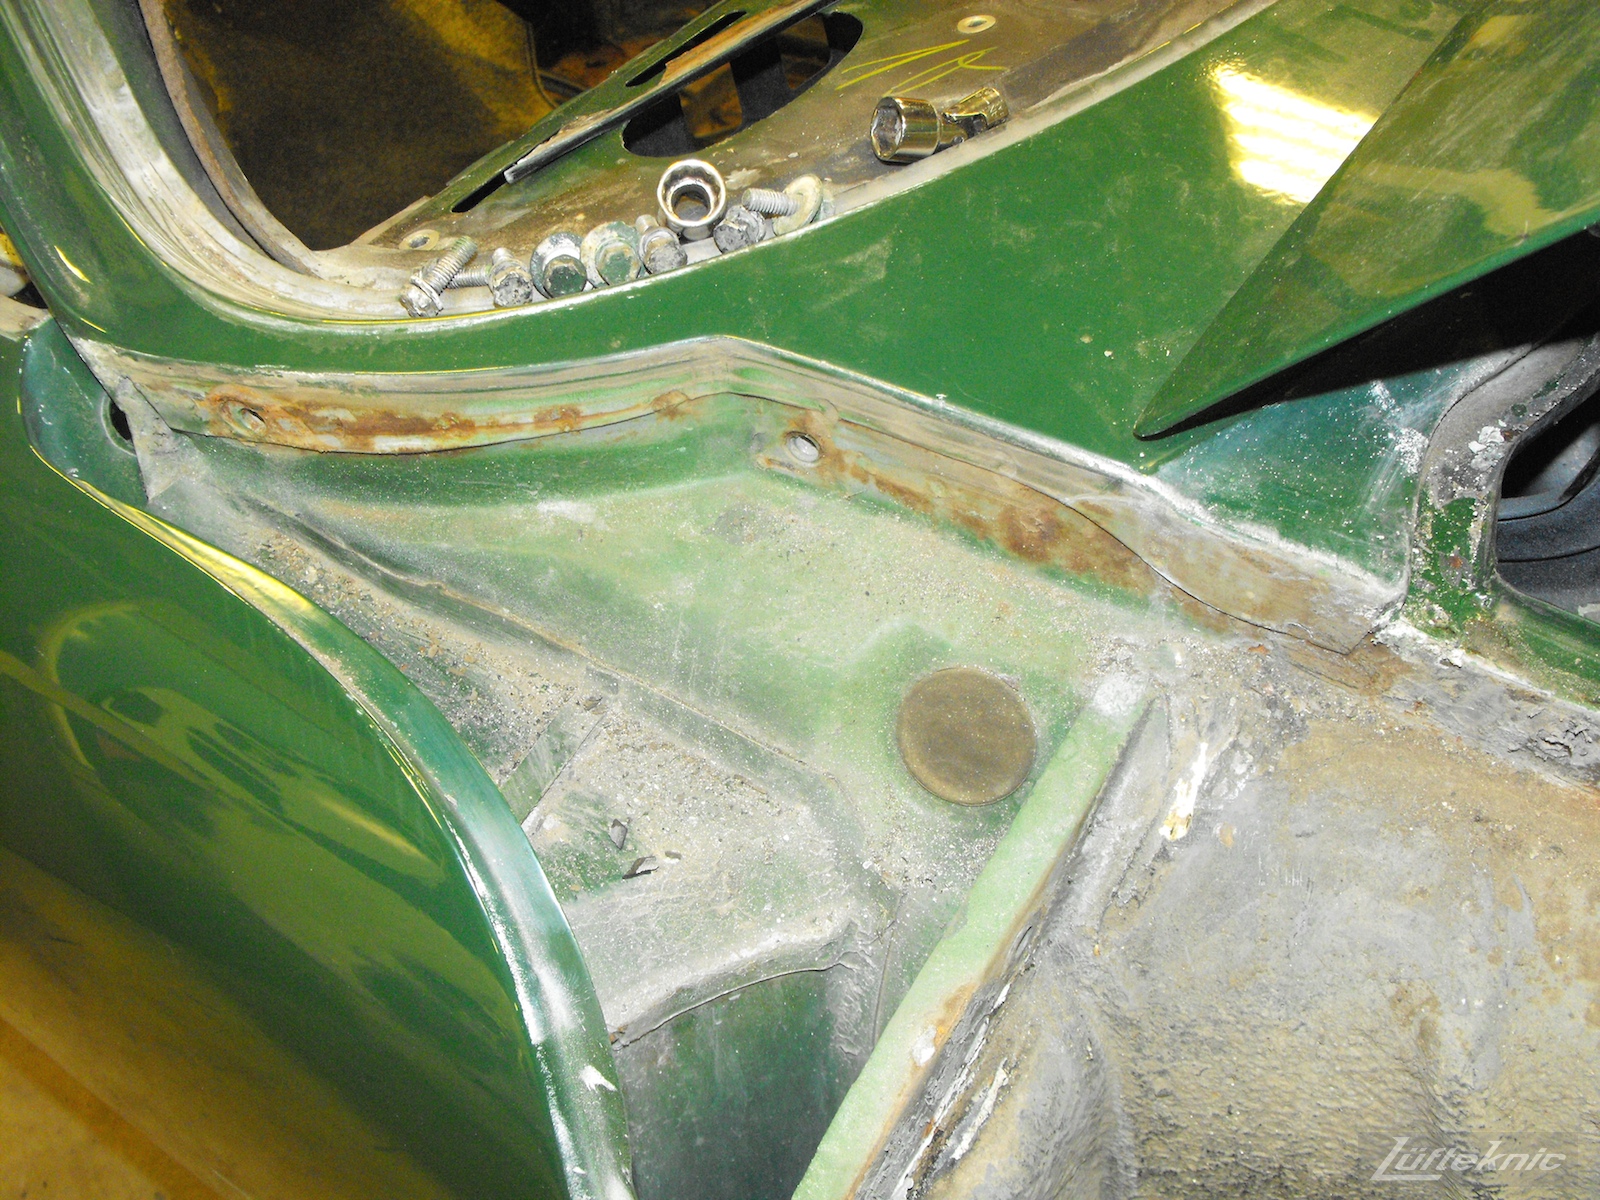 Front chassis age on an Irish Green Porsche 912 undergoing restoration at Lufteknic.